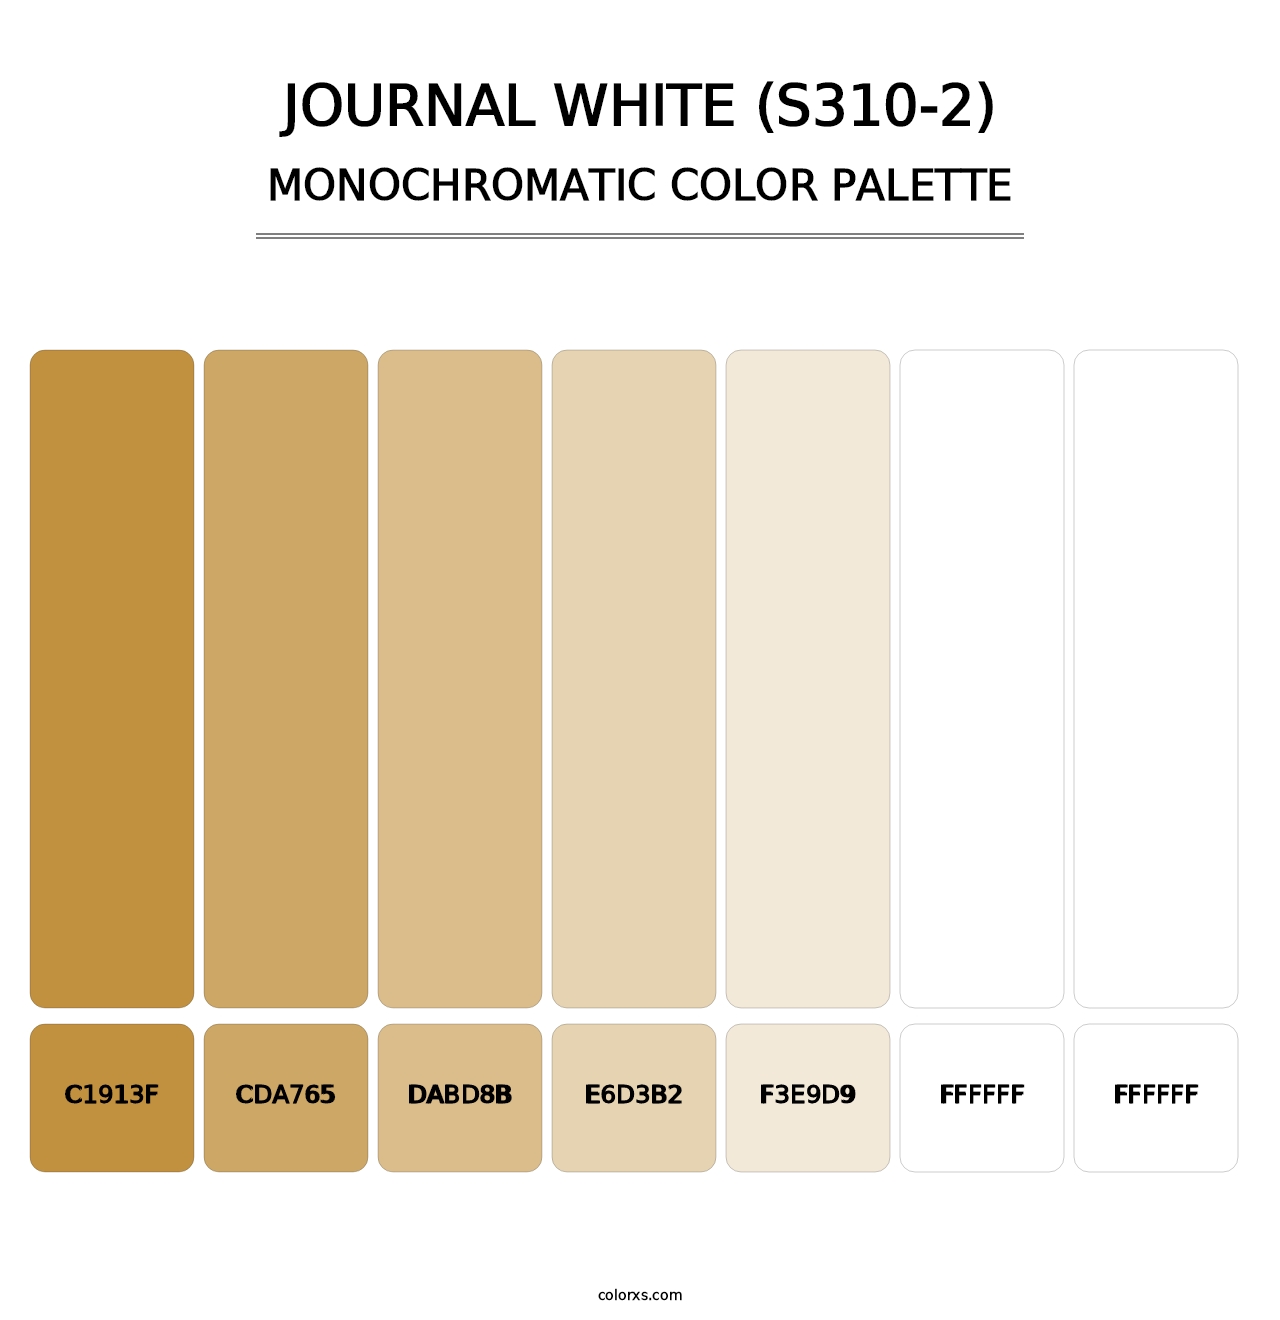 Journal White (S310-2) - Monochromatic Color Palette